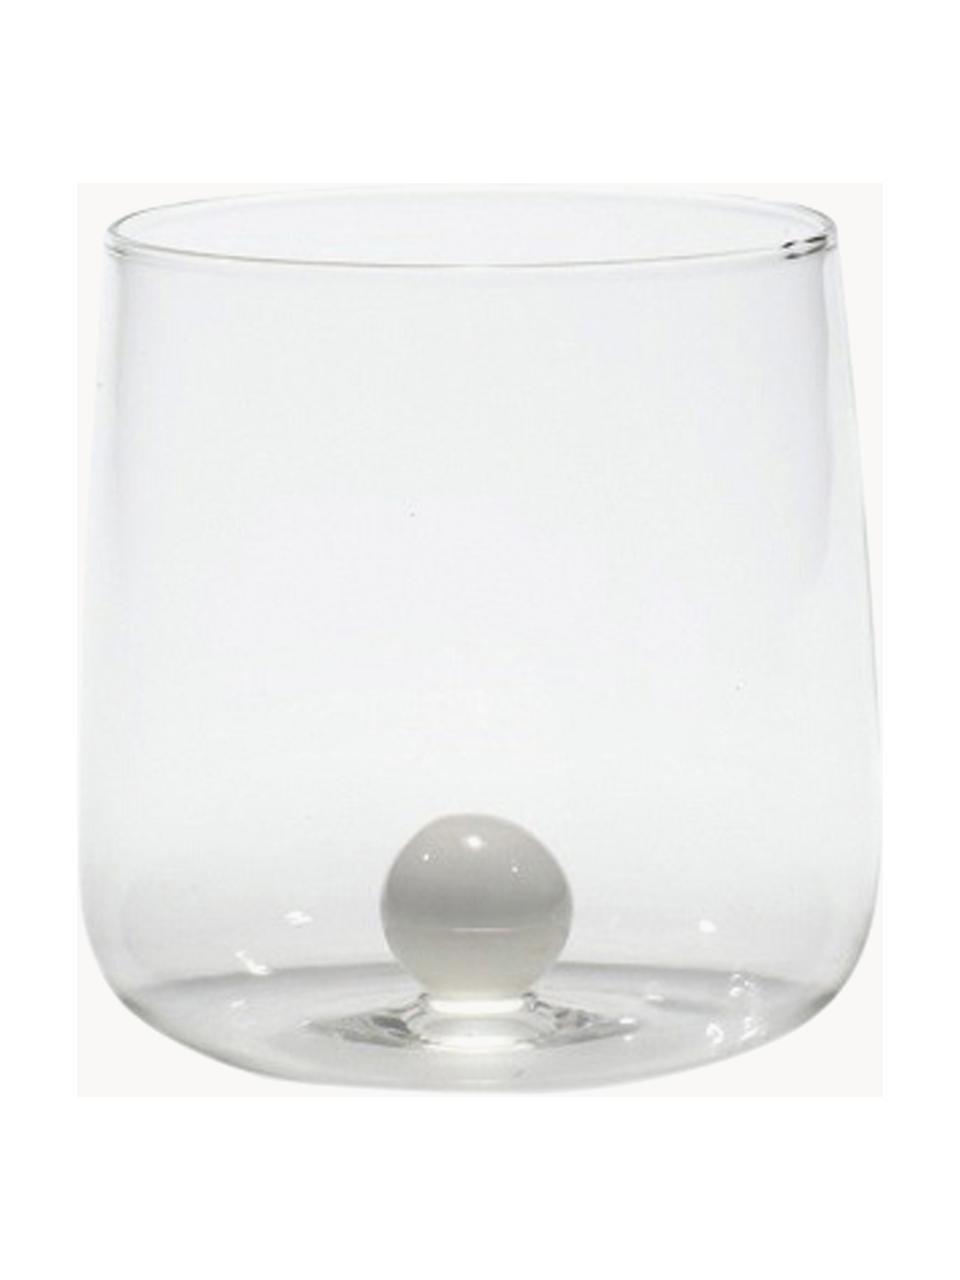 Handgemaakte waterglazen Bilia, 6 stuks, Borosilicaatglas, Transparant, wit, Ø 9 x H 9 cm, 440 ml